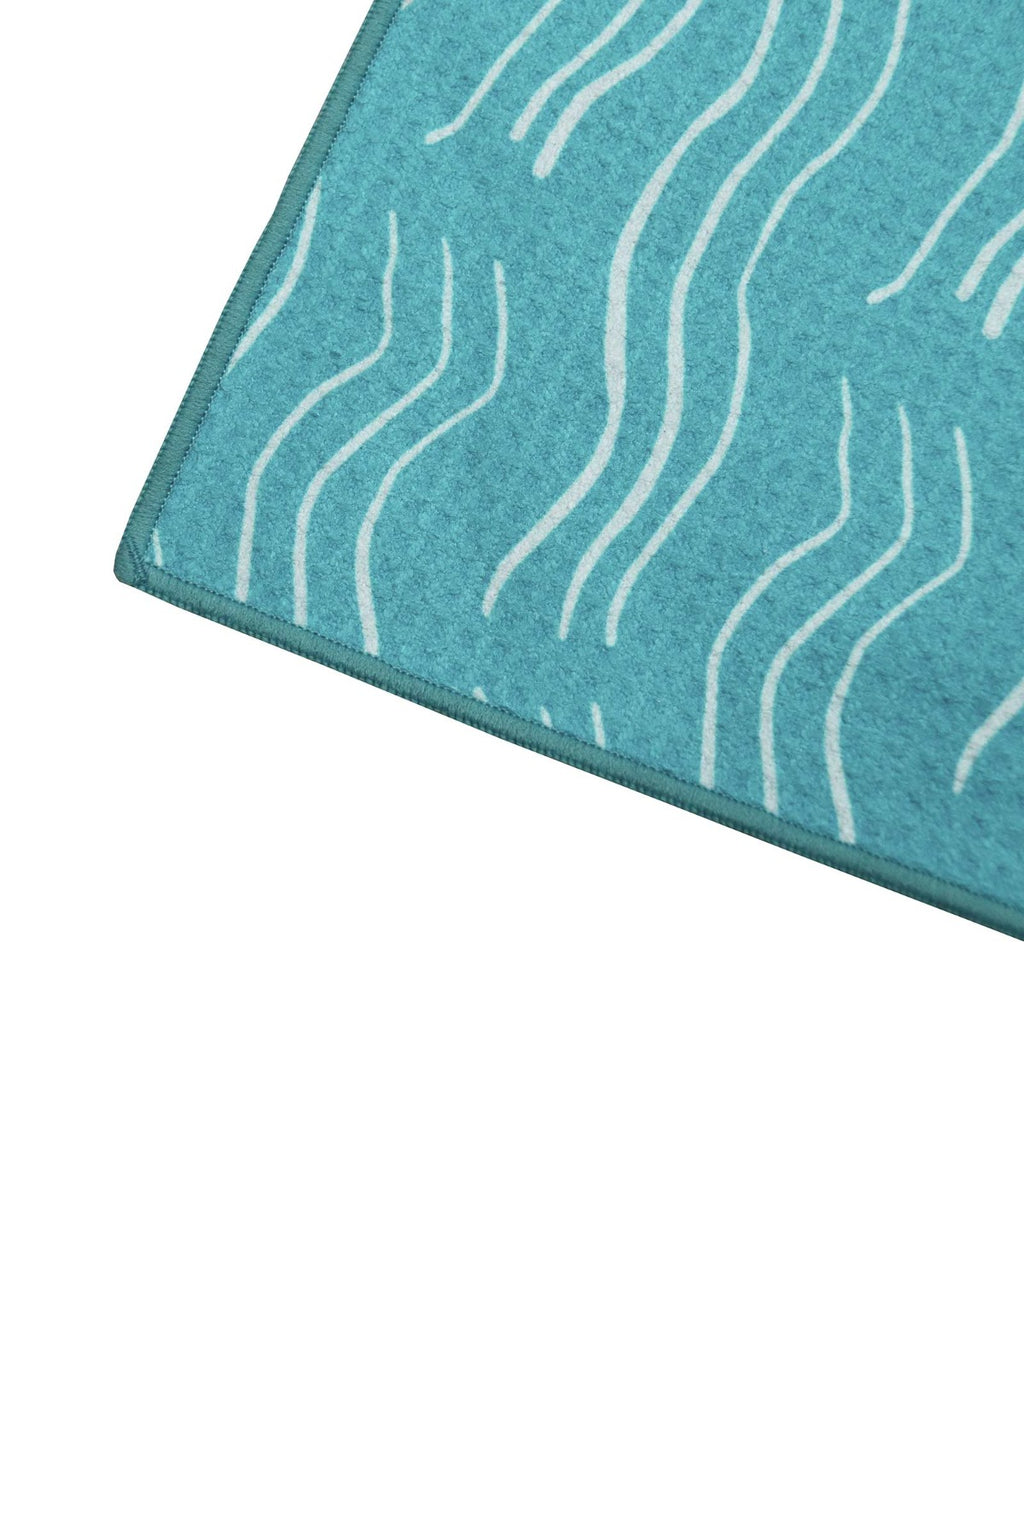 Aqua Sand Free Towel